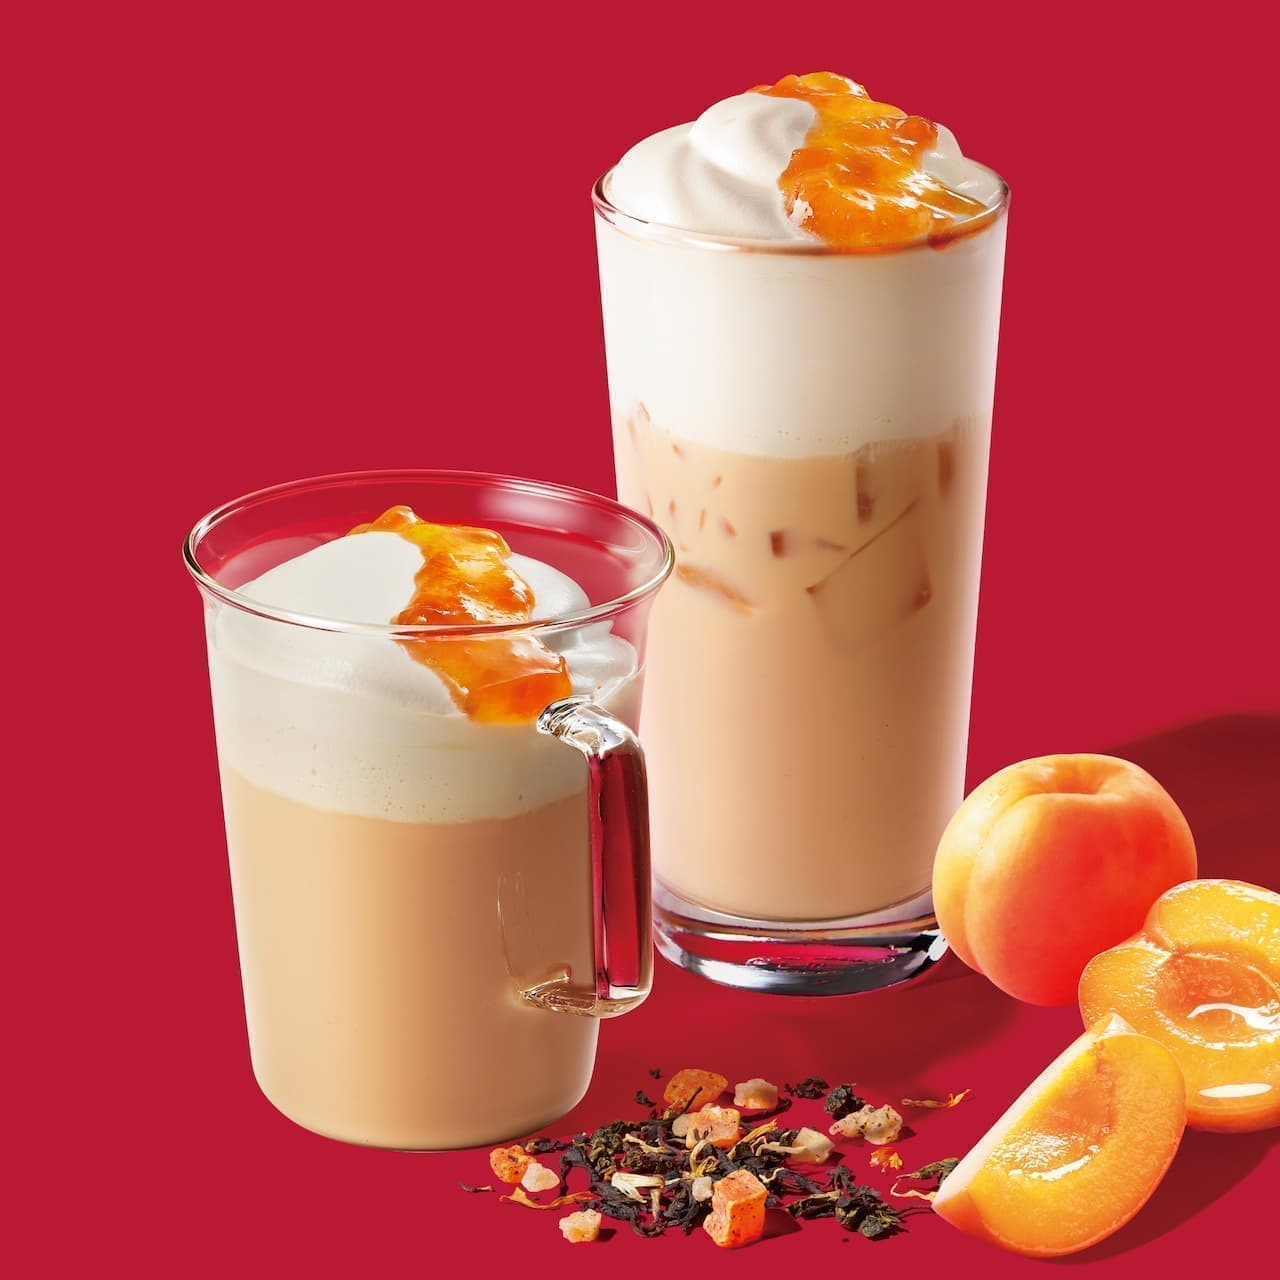 Starbucks "Joyful Medley Apricot & Mousse Tea Latte".